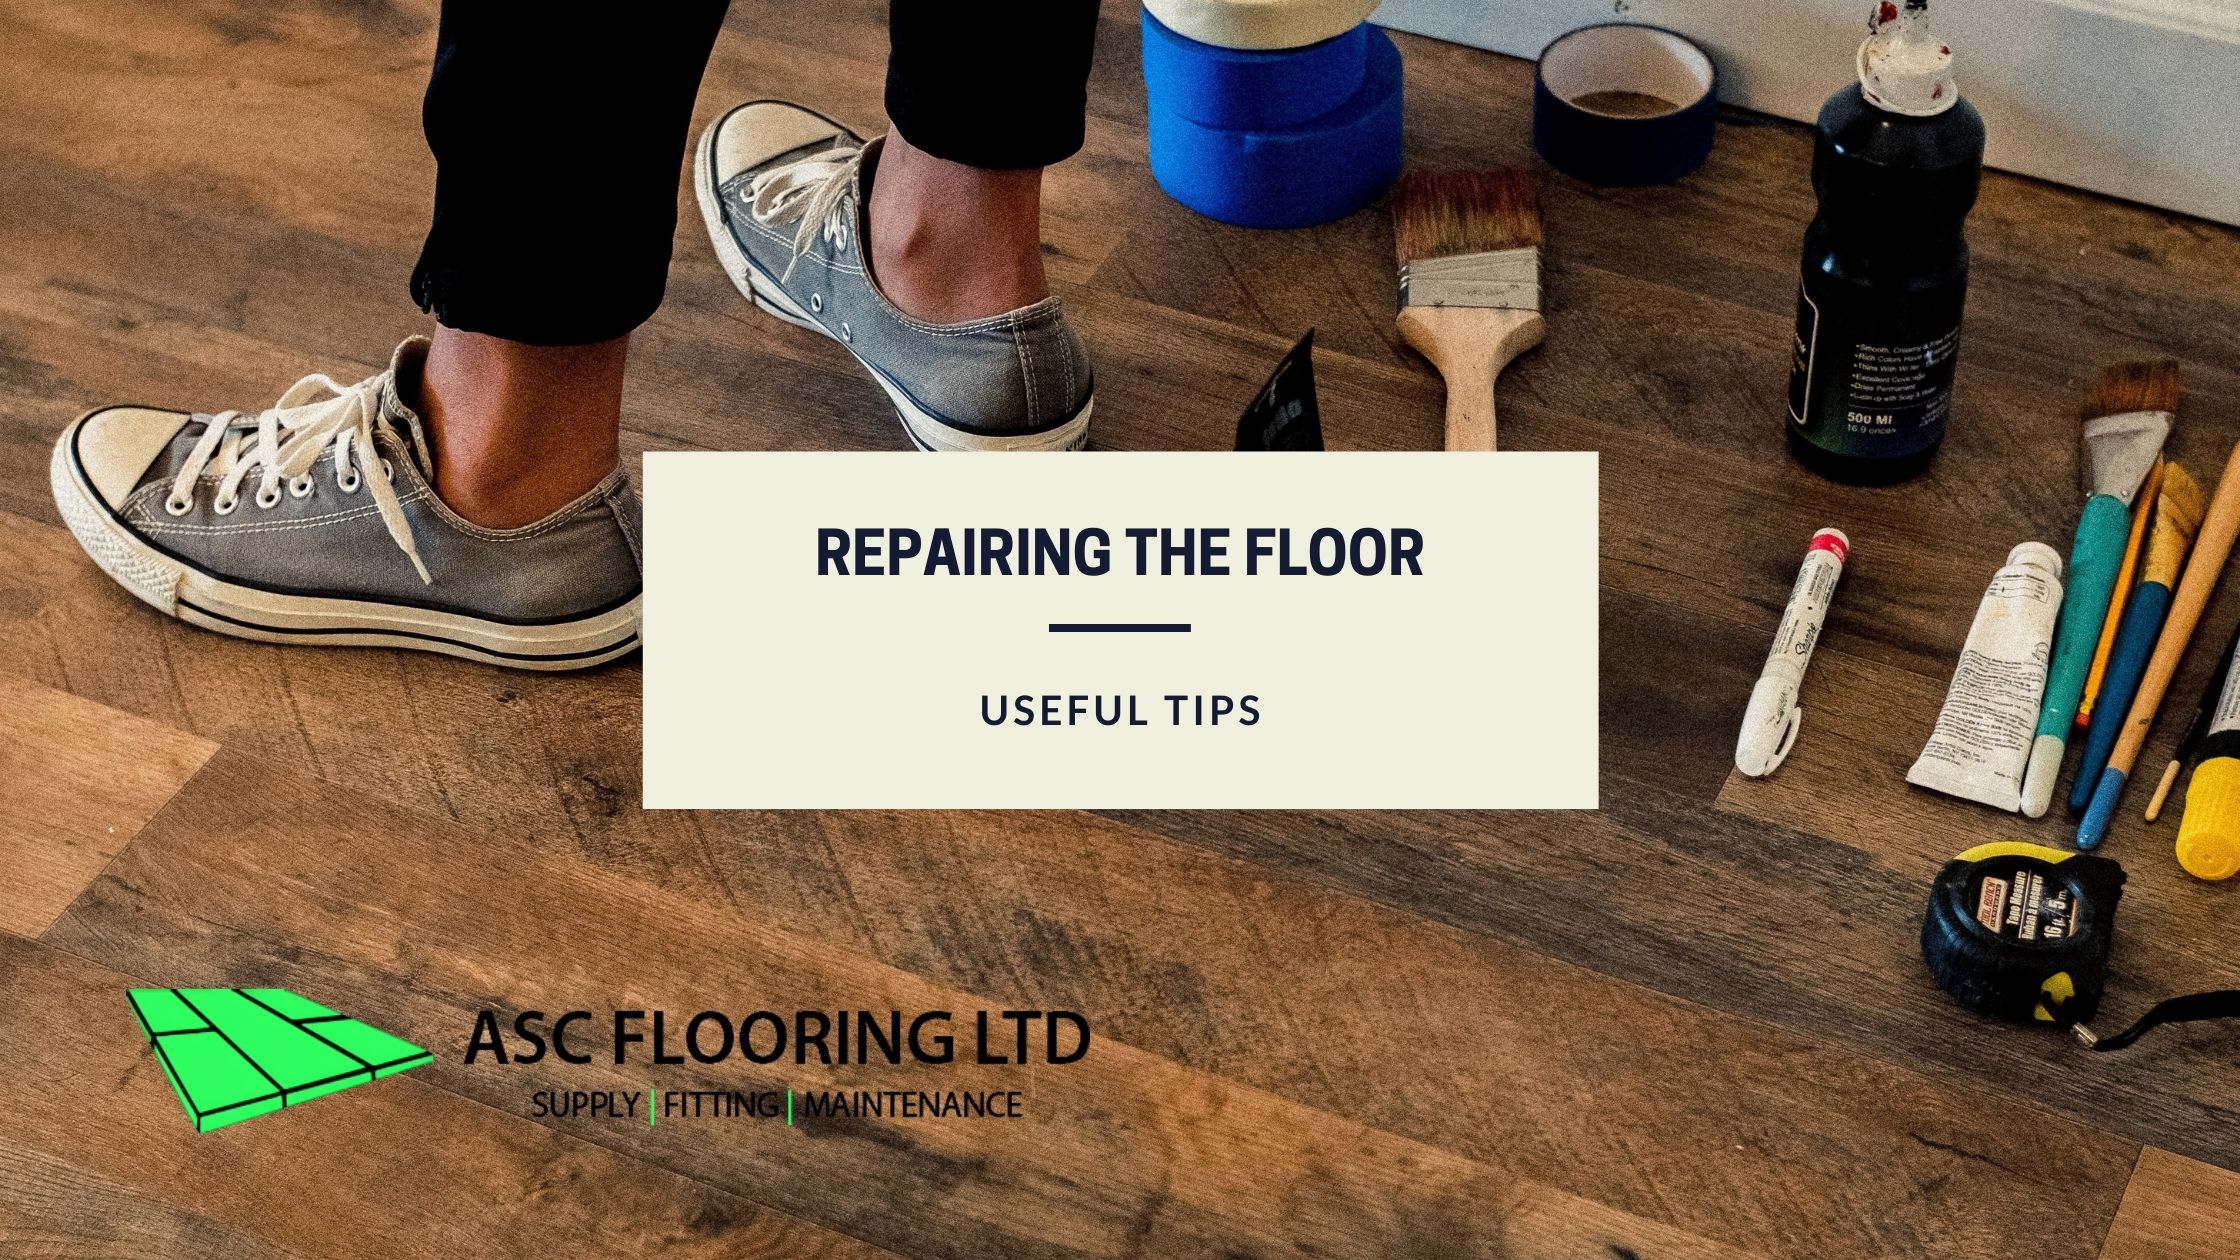 How to repair the floor